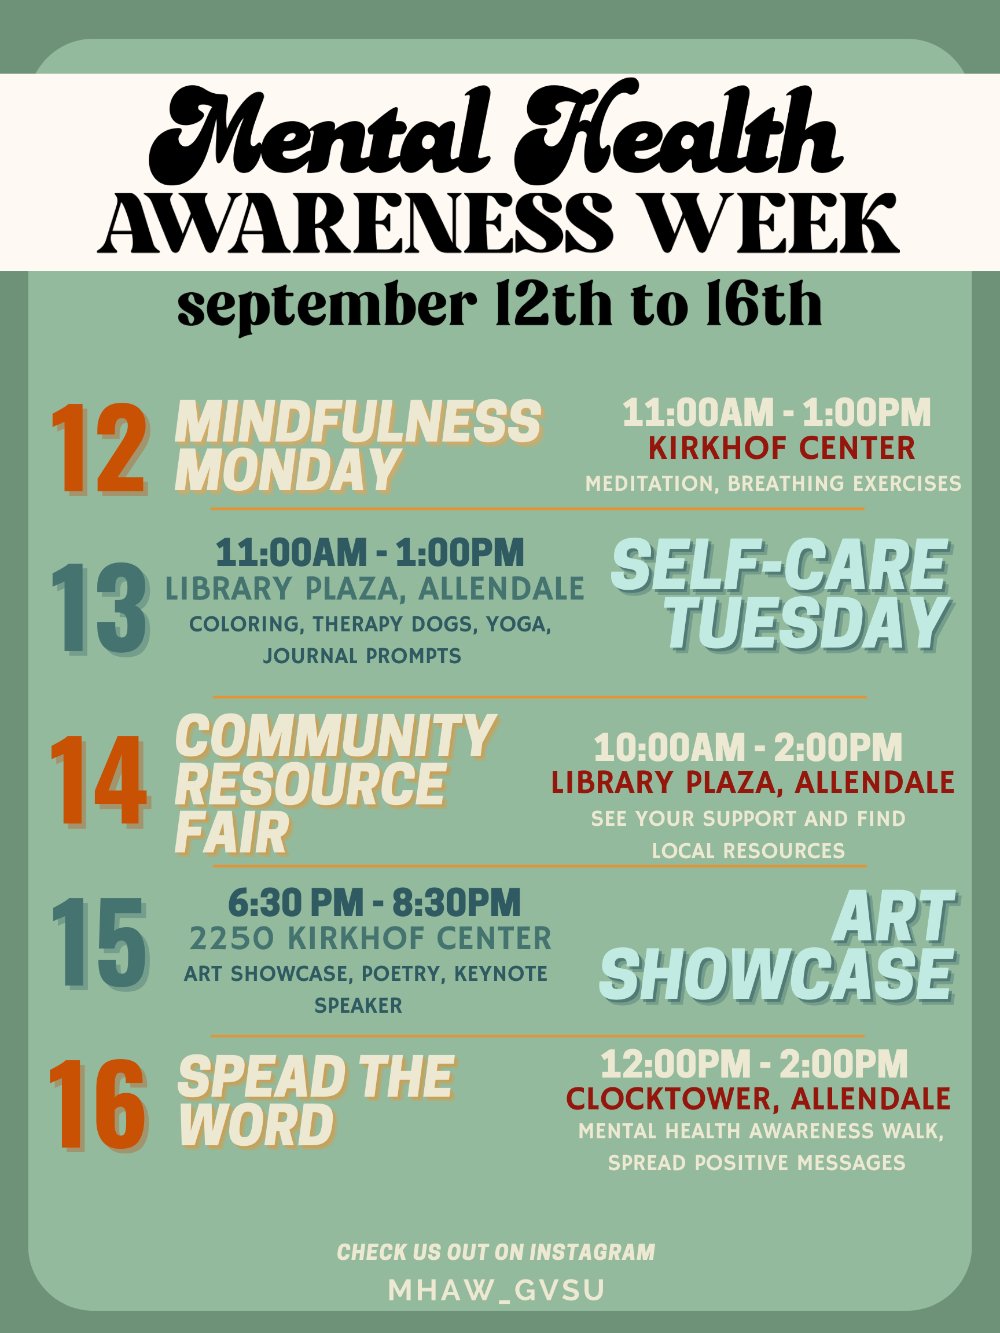 Mental Health Awareness Week Information Flyer